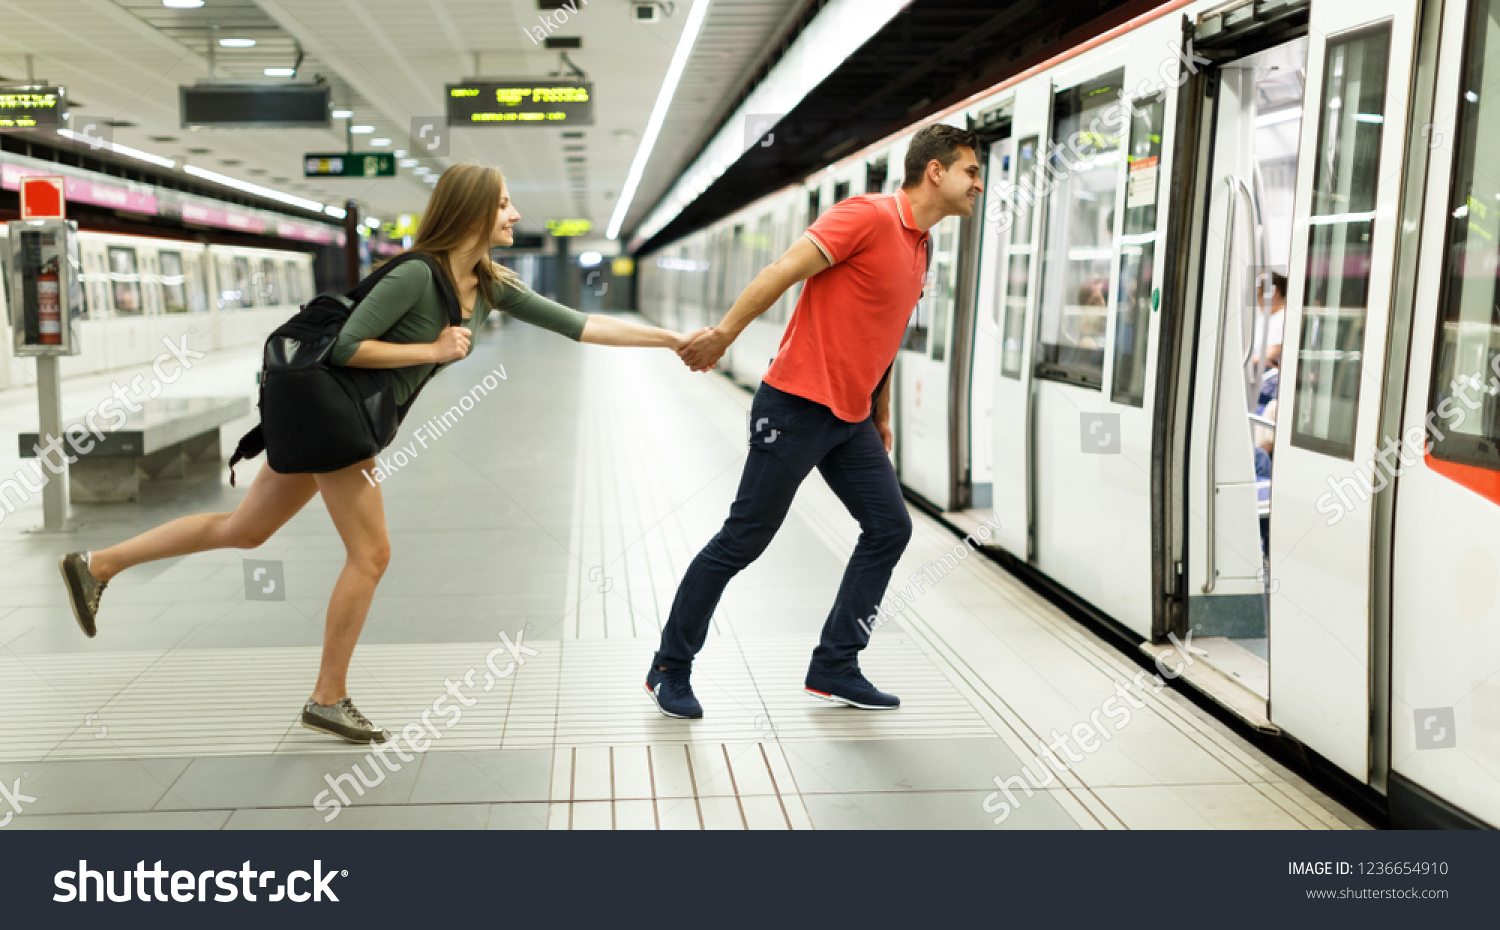 Running train on girlfriend